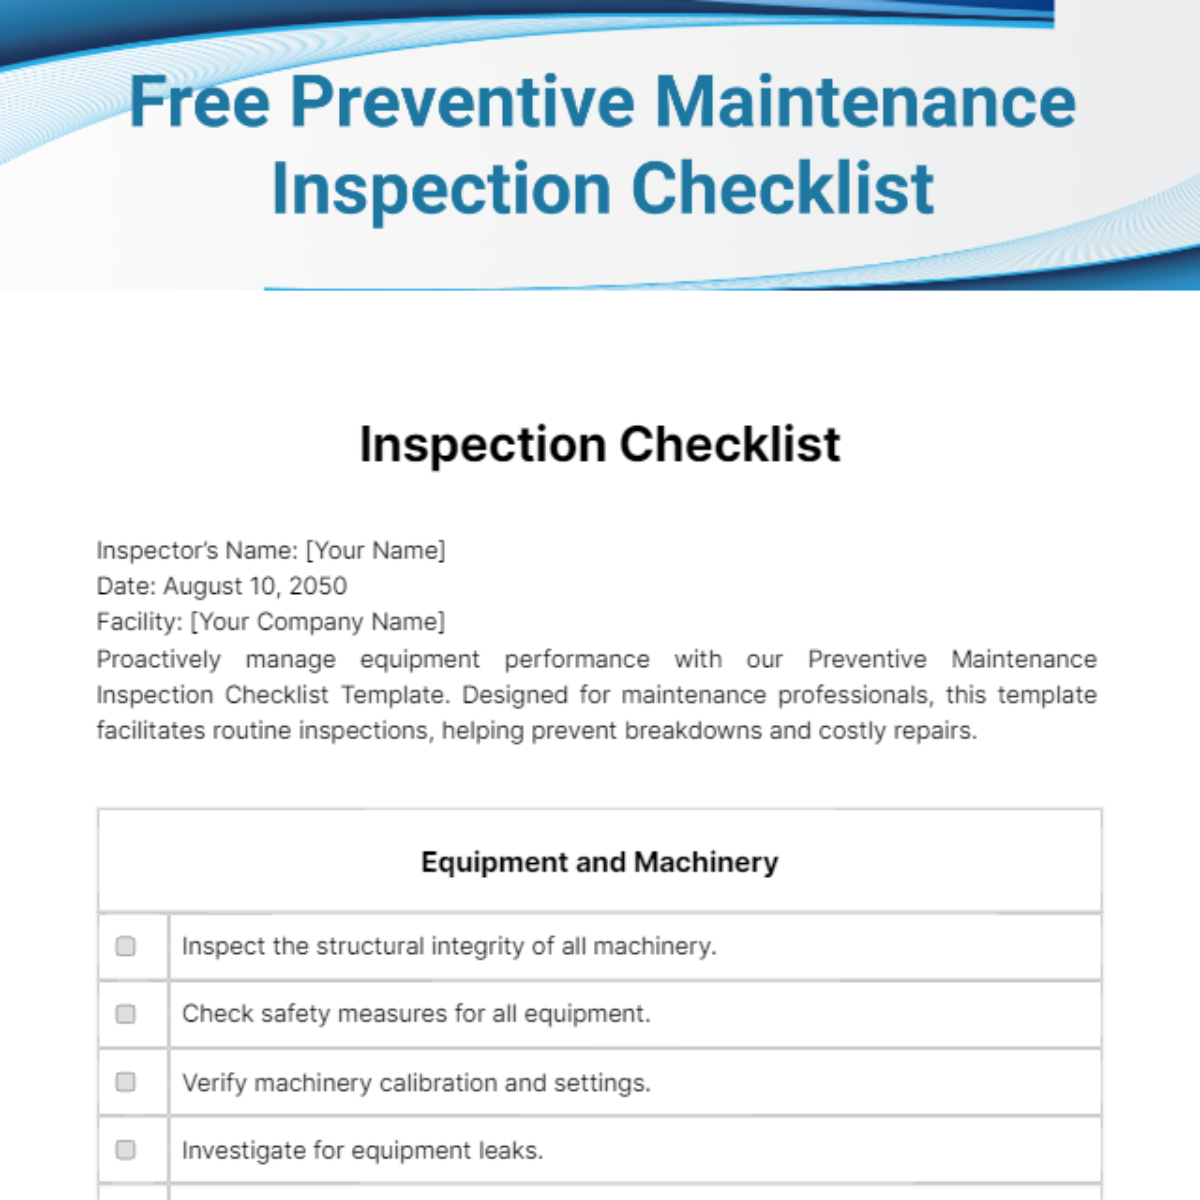 Preventive Maintenance Inspection Checklist Template